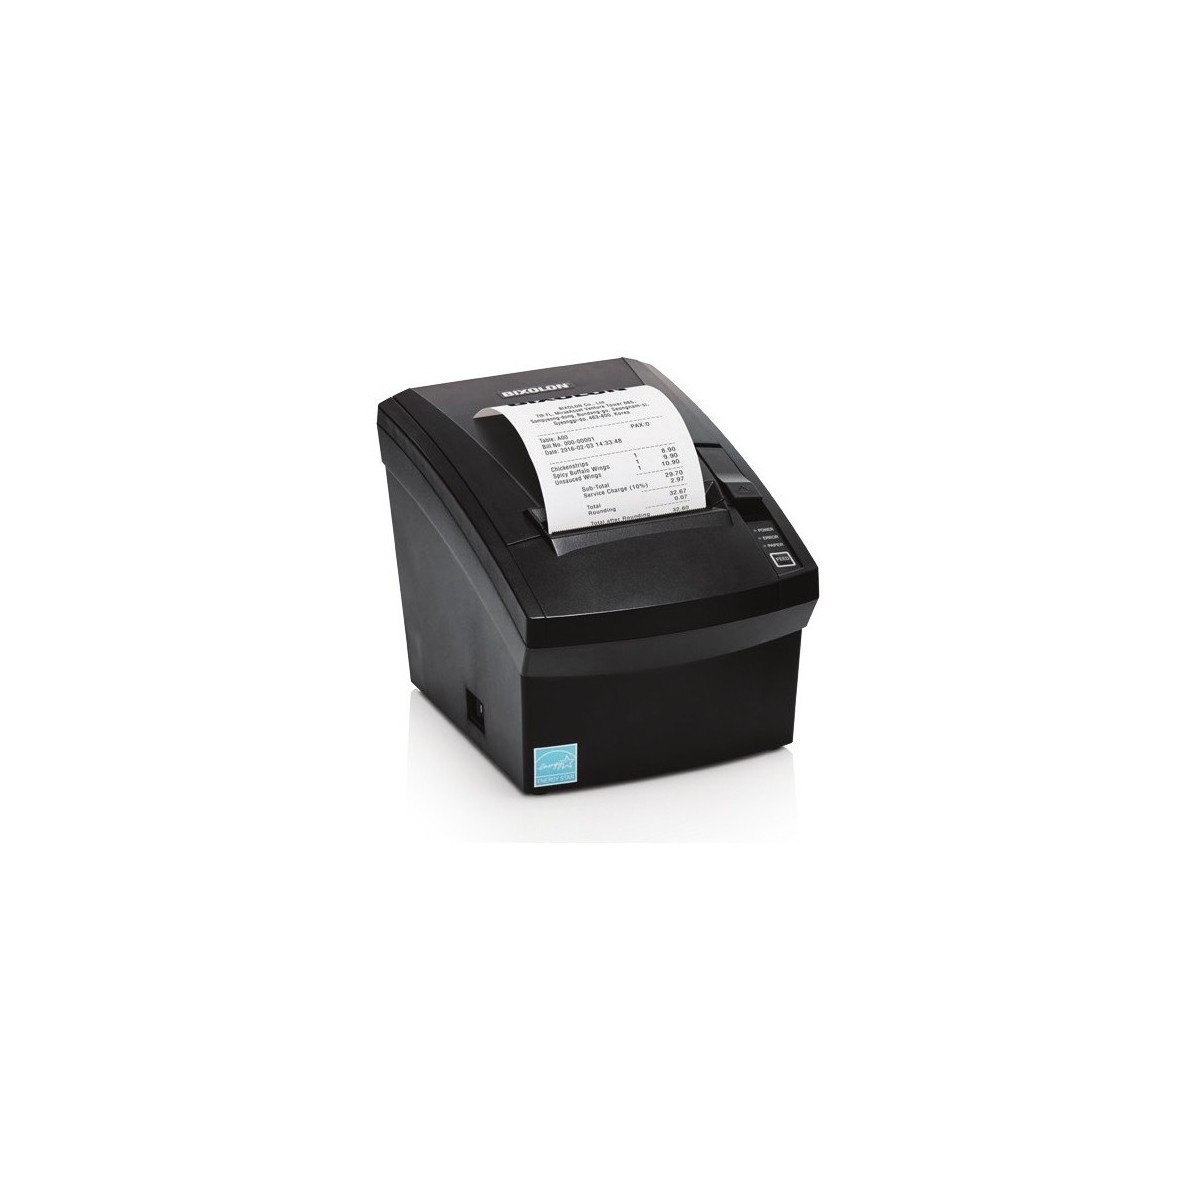 BIXOLON SRP-332II - Direct thermal - POS printer - 203 x 203 DPI - 220 mm-sec - 24 x 24 mm - 8 cm